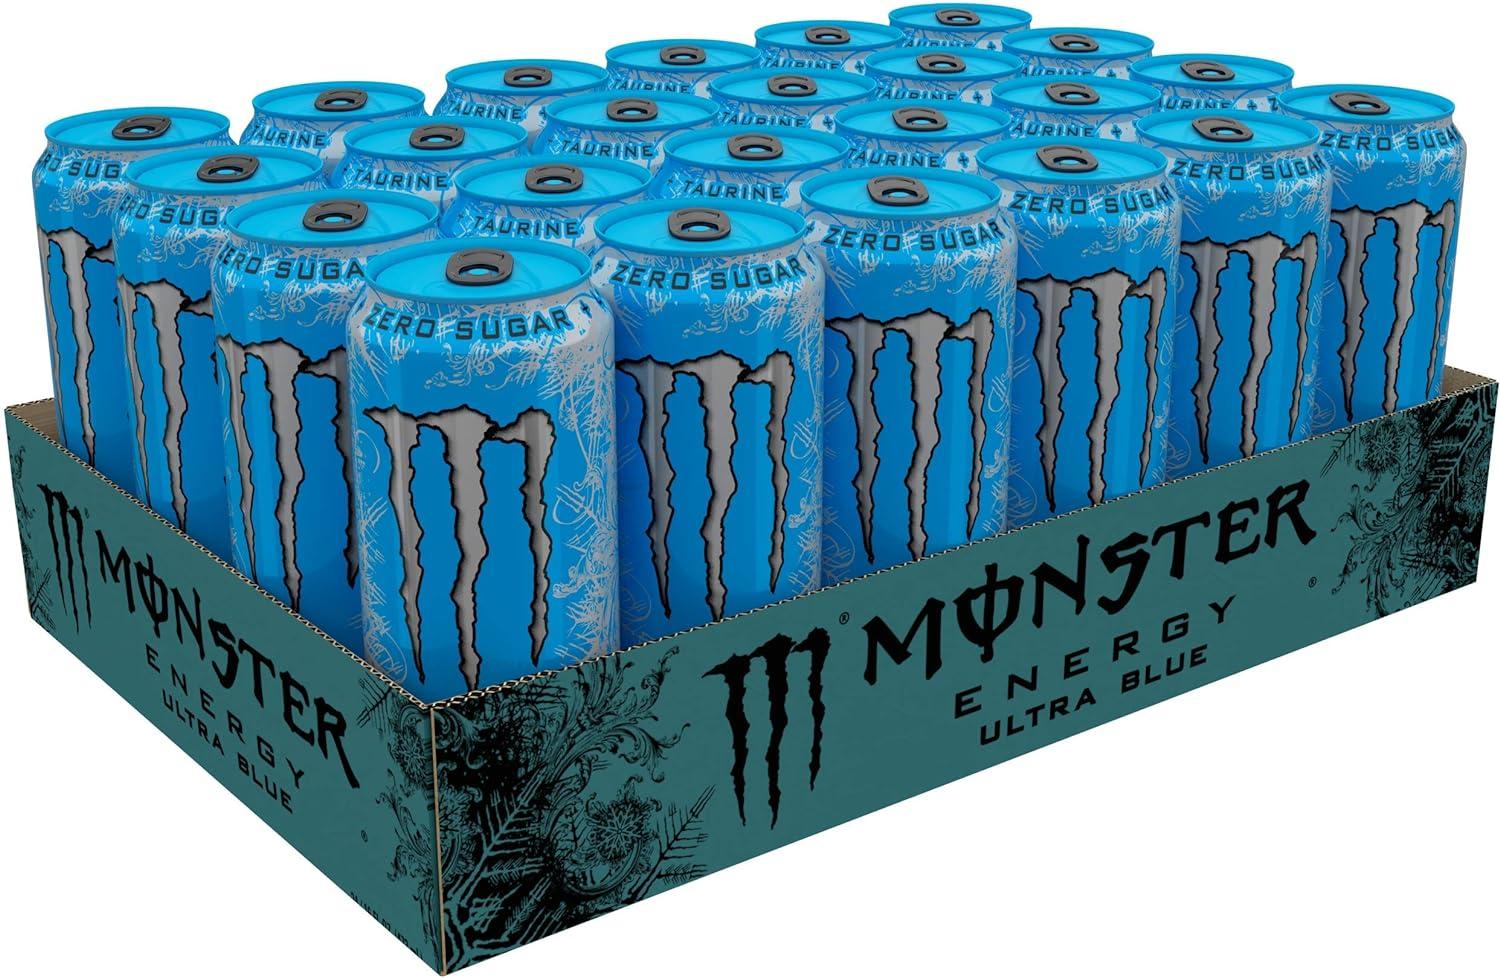 Monster Energy Ultra Paradise, Sugar Free Energy Drink